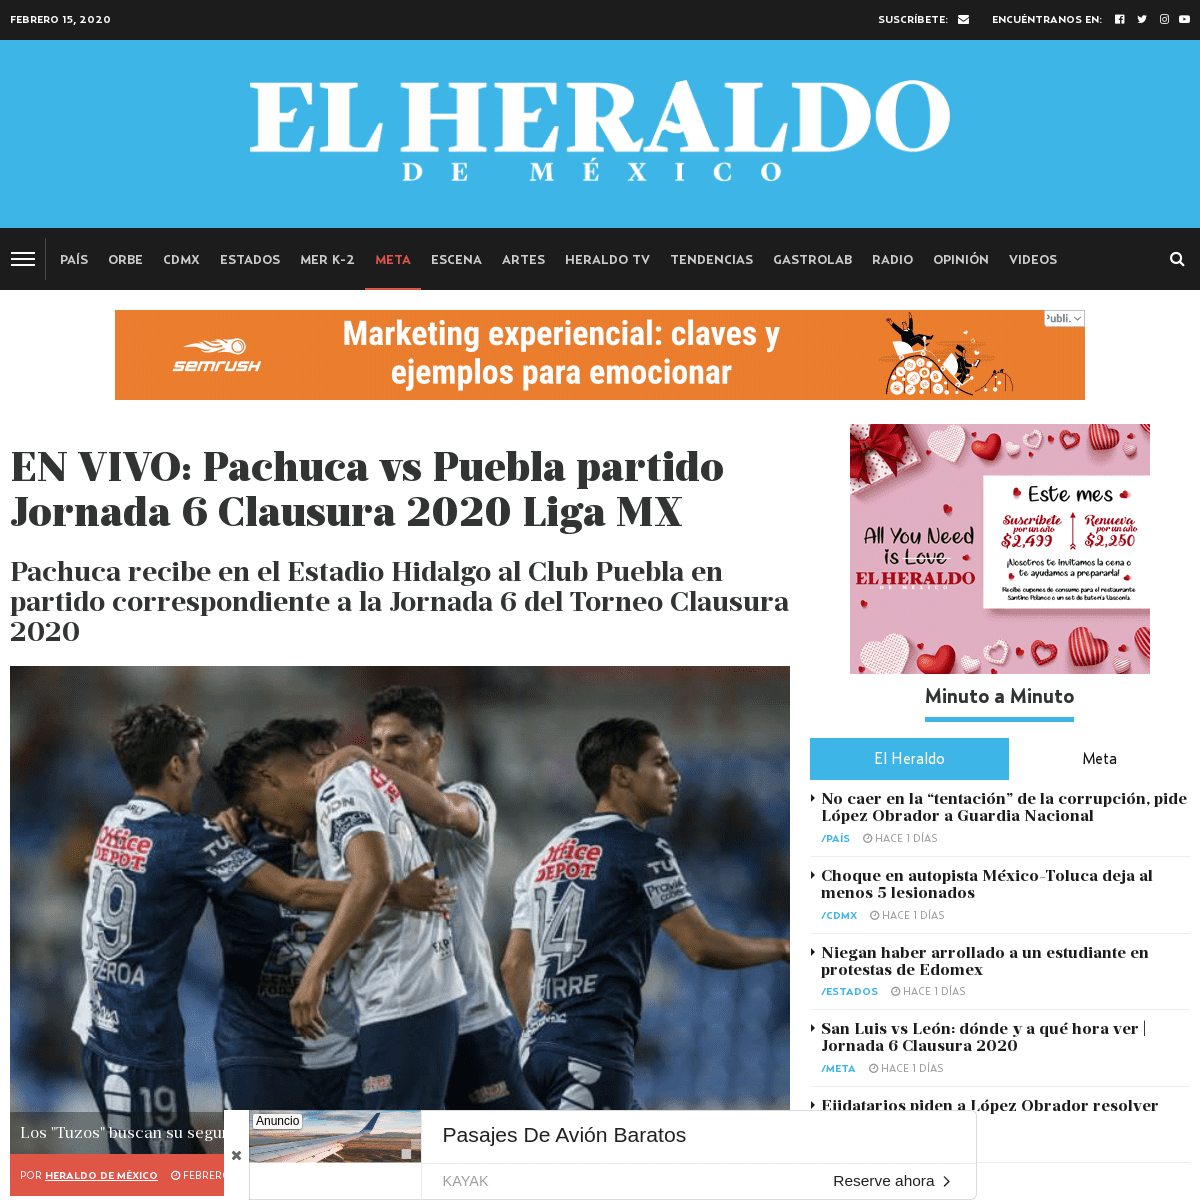 A complete backup of heraldodemexico.com.mx/meta/en-vivo-pachuca-vs-puebla-partido-jornada-6-clausura-2020-liga-mx/